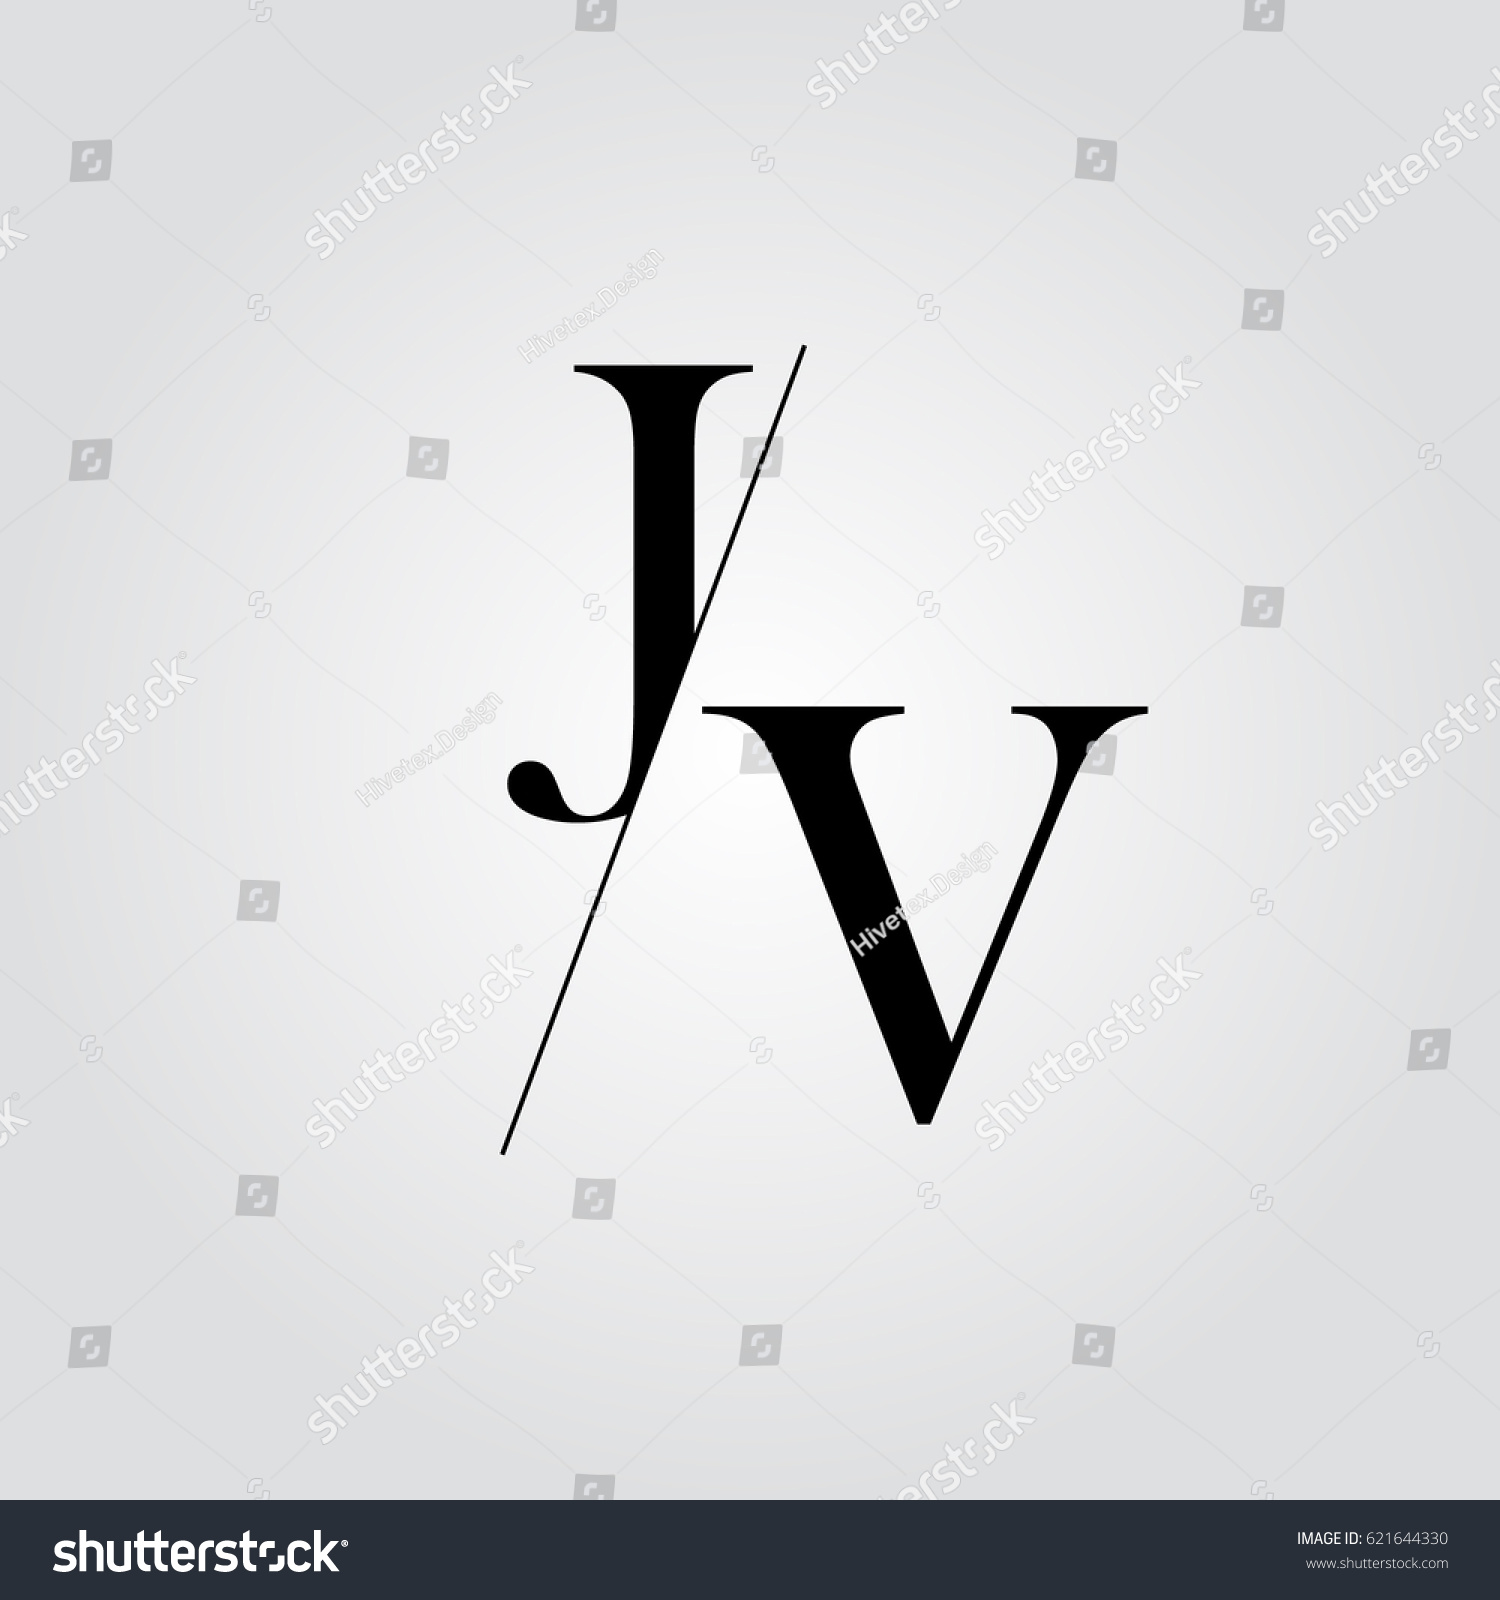 Jv Logo Stock Vector Royalty Free Shutterstock